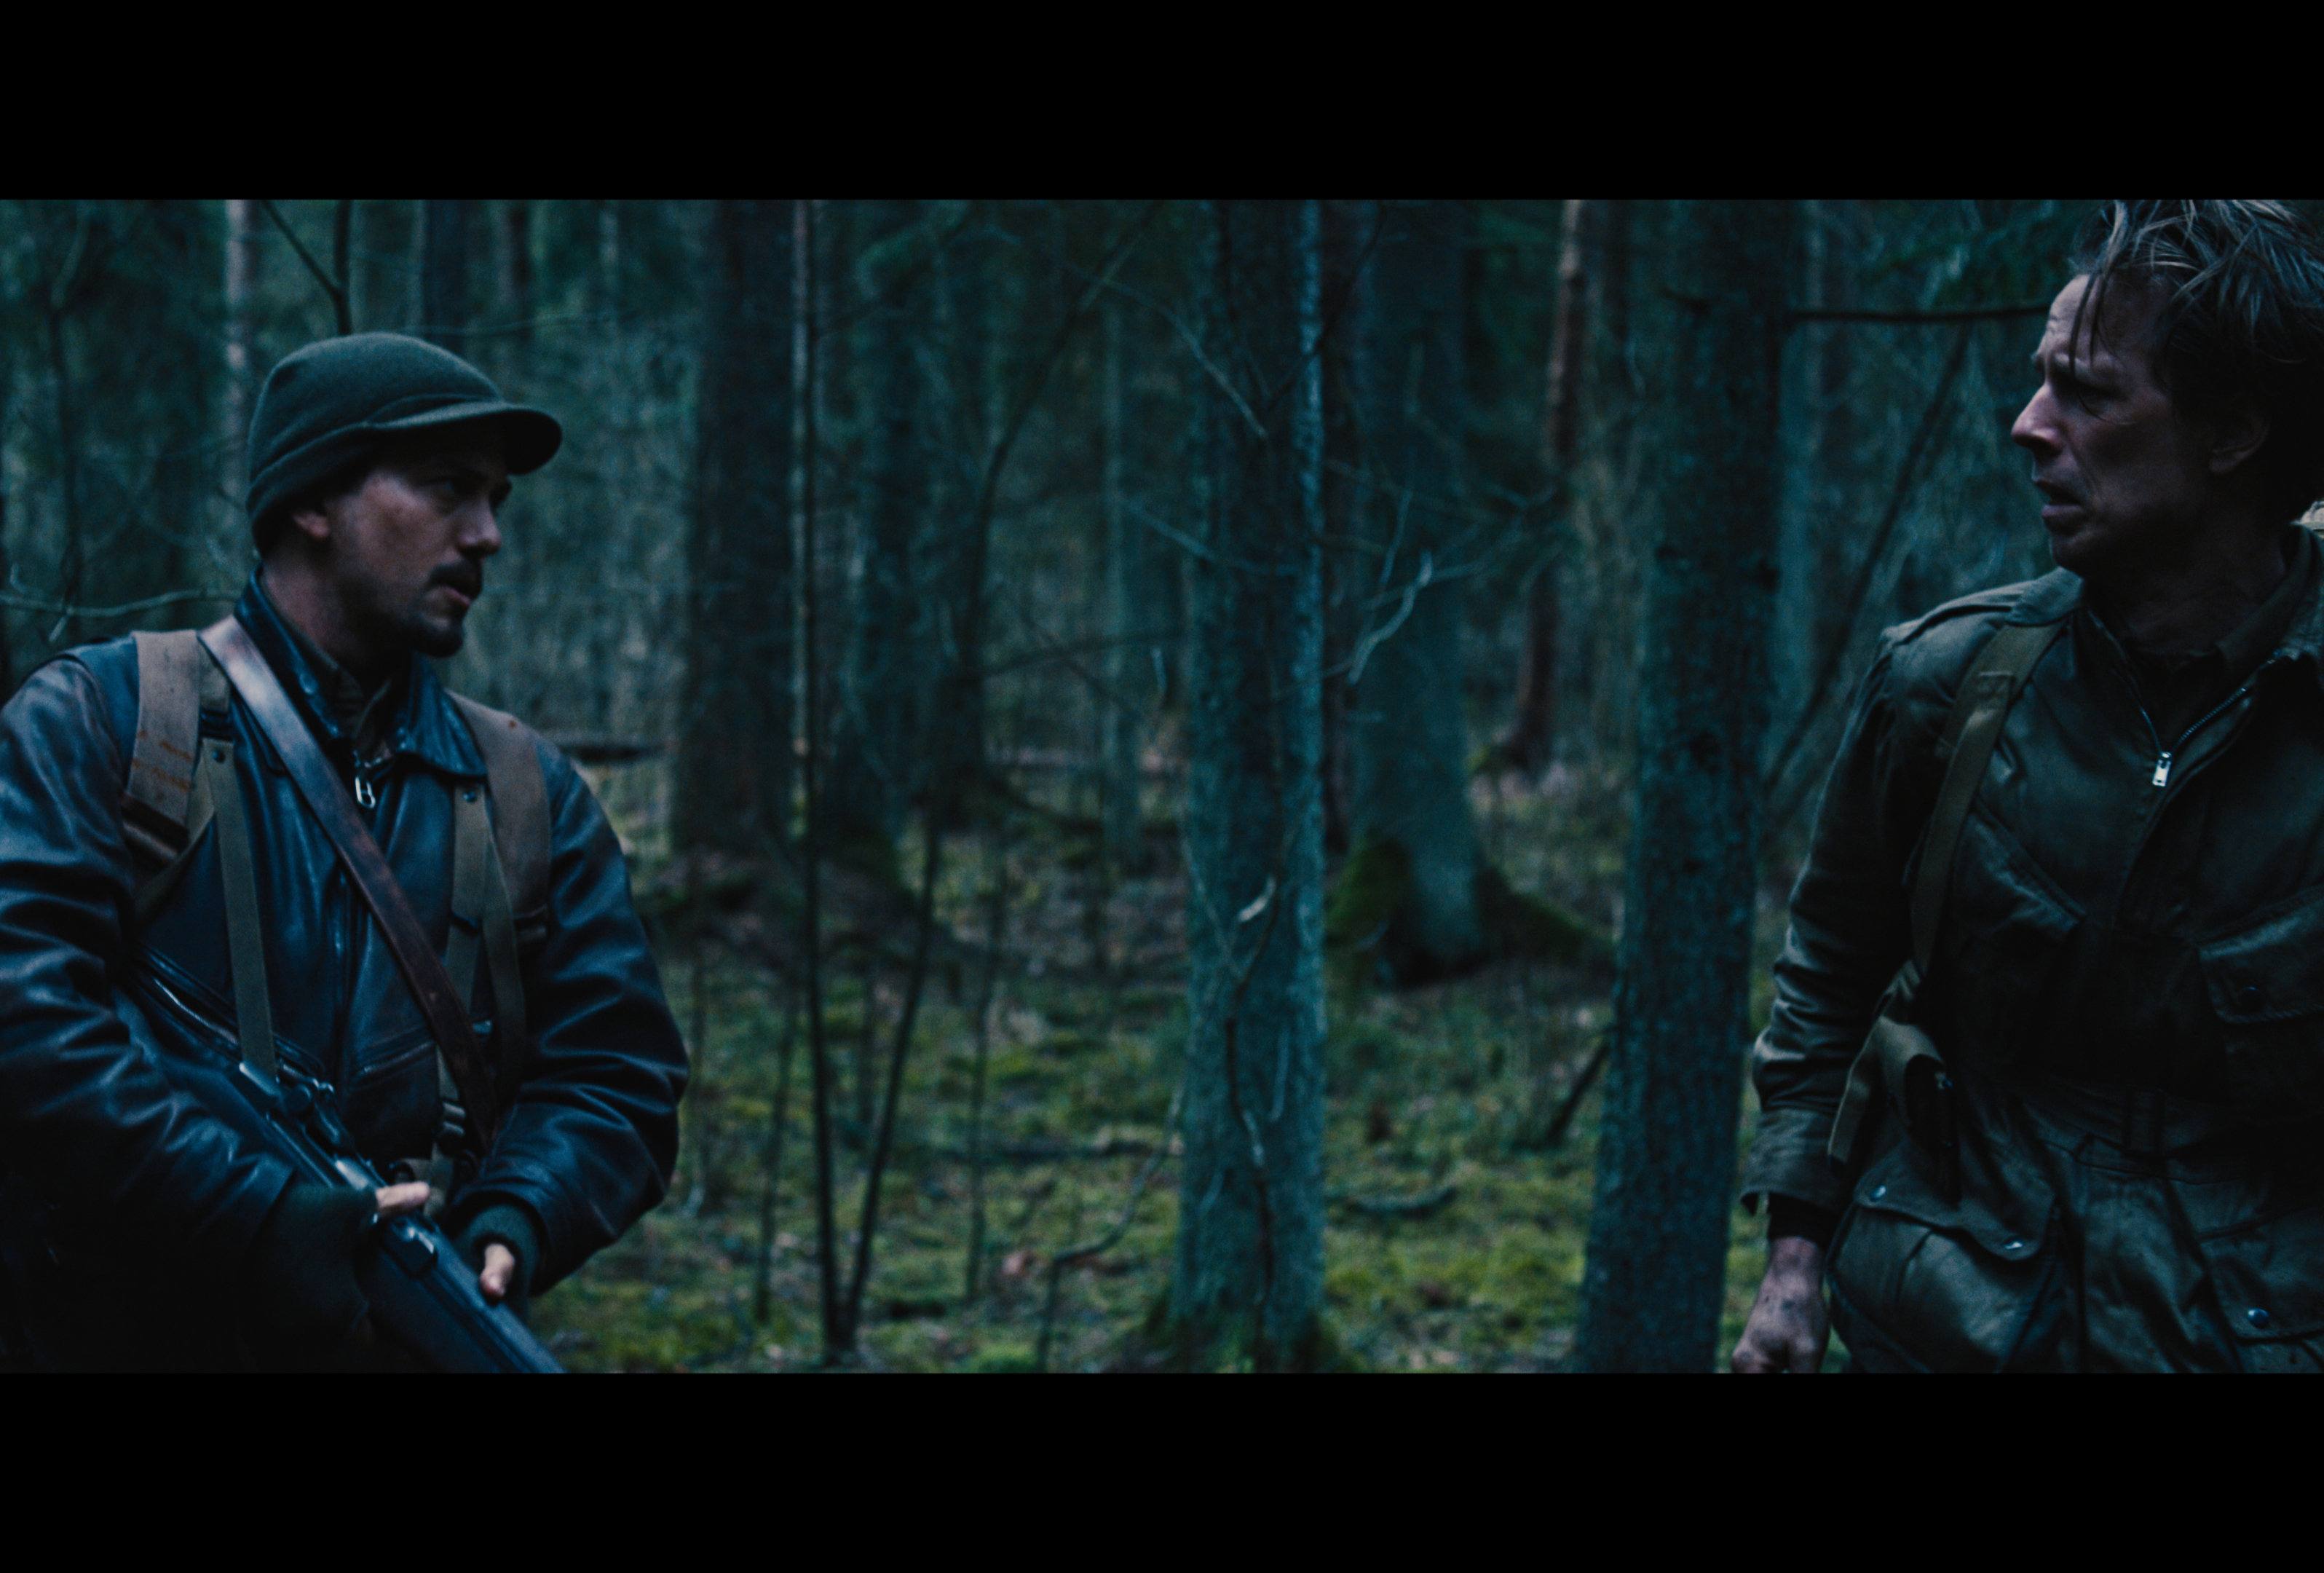 Scandinavian actor Fredrik Wagner and Jackson Rathbone as American soldiers in drama supernatural war film Warhunt